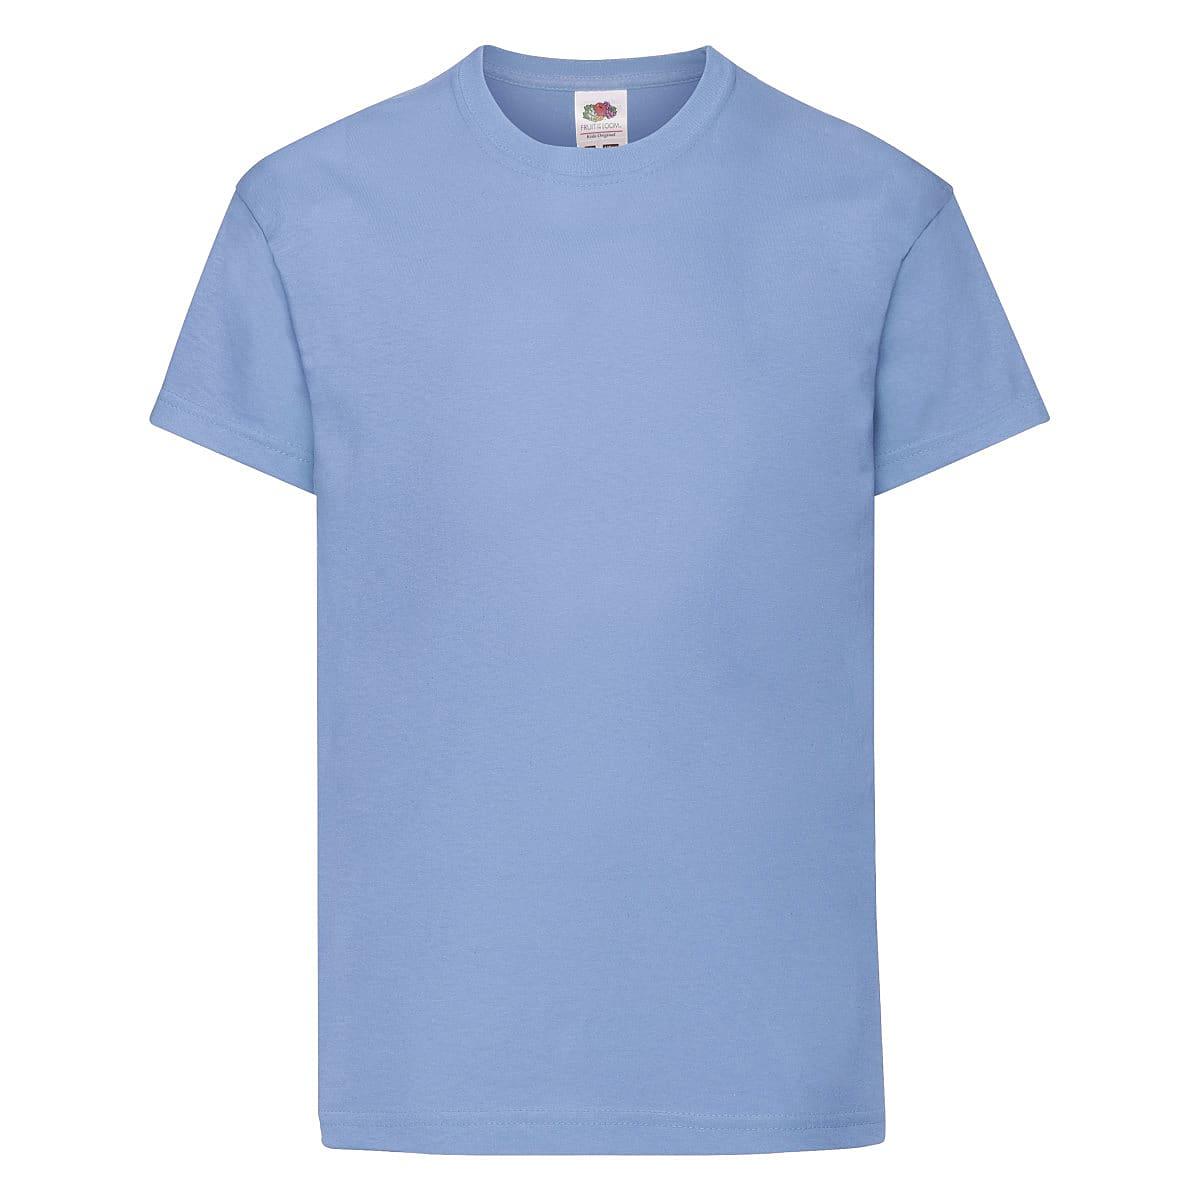 Fruit Of The Loom Kids Original T-Shirt in Sky Blue (Product Code: 61019)